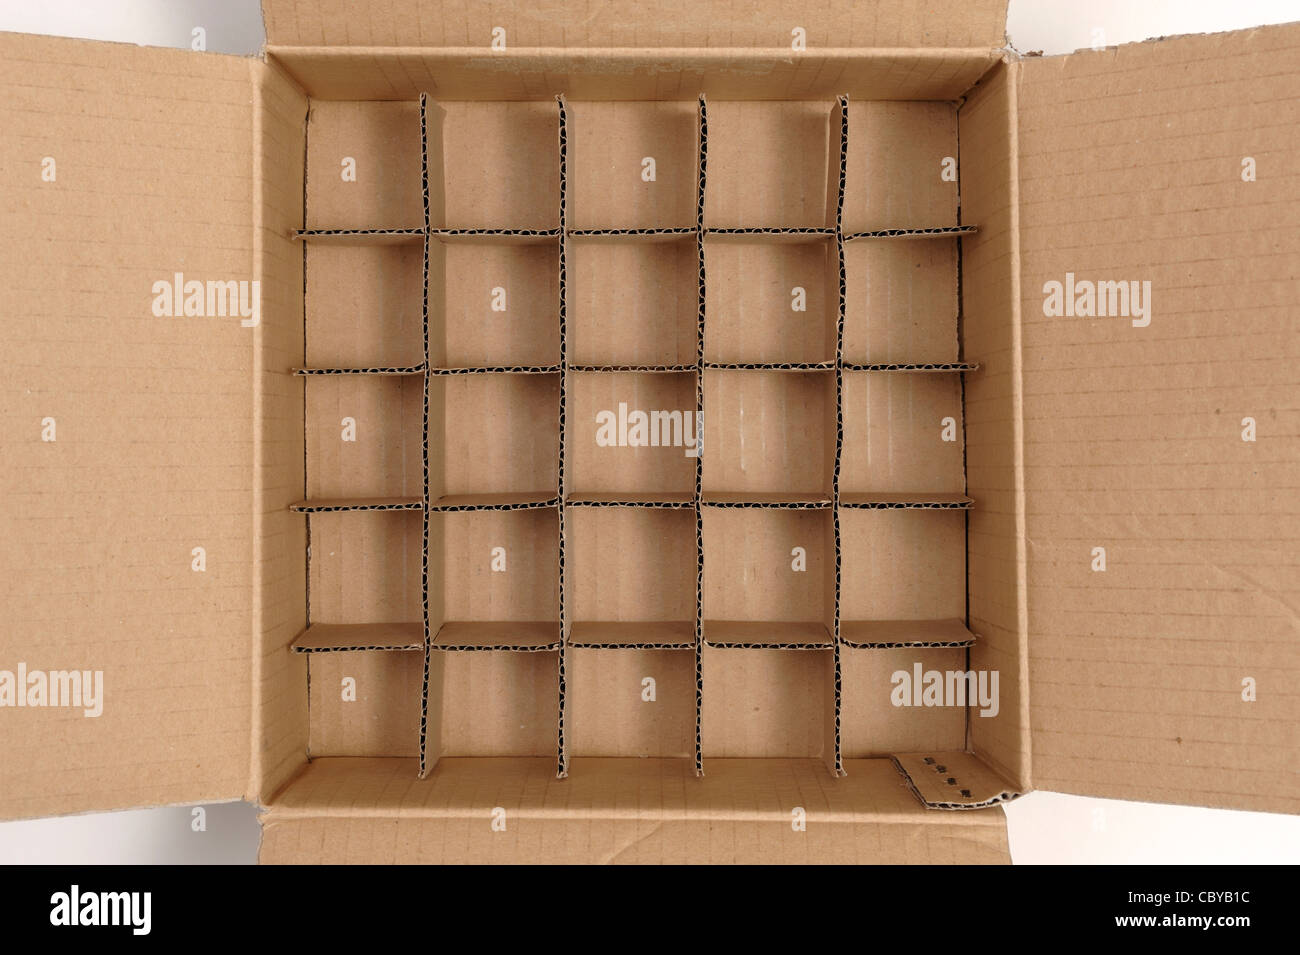 Cardboard box overhead Stock Photo